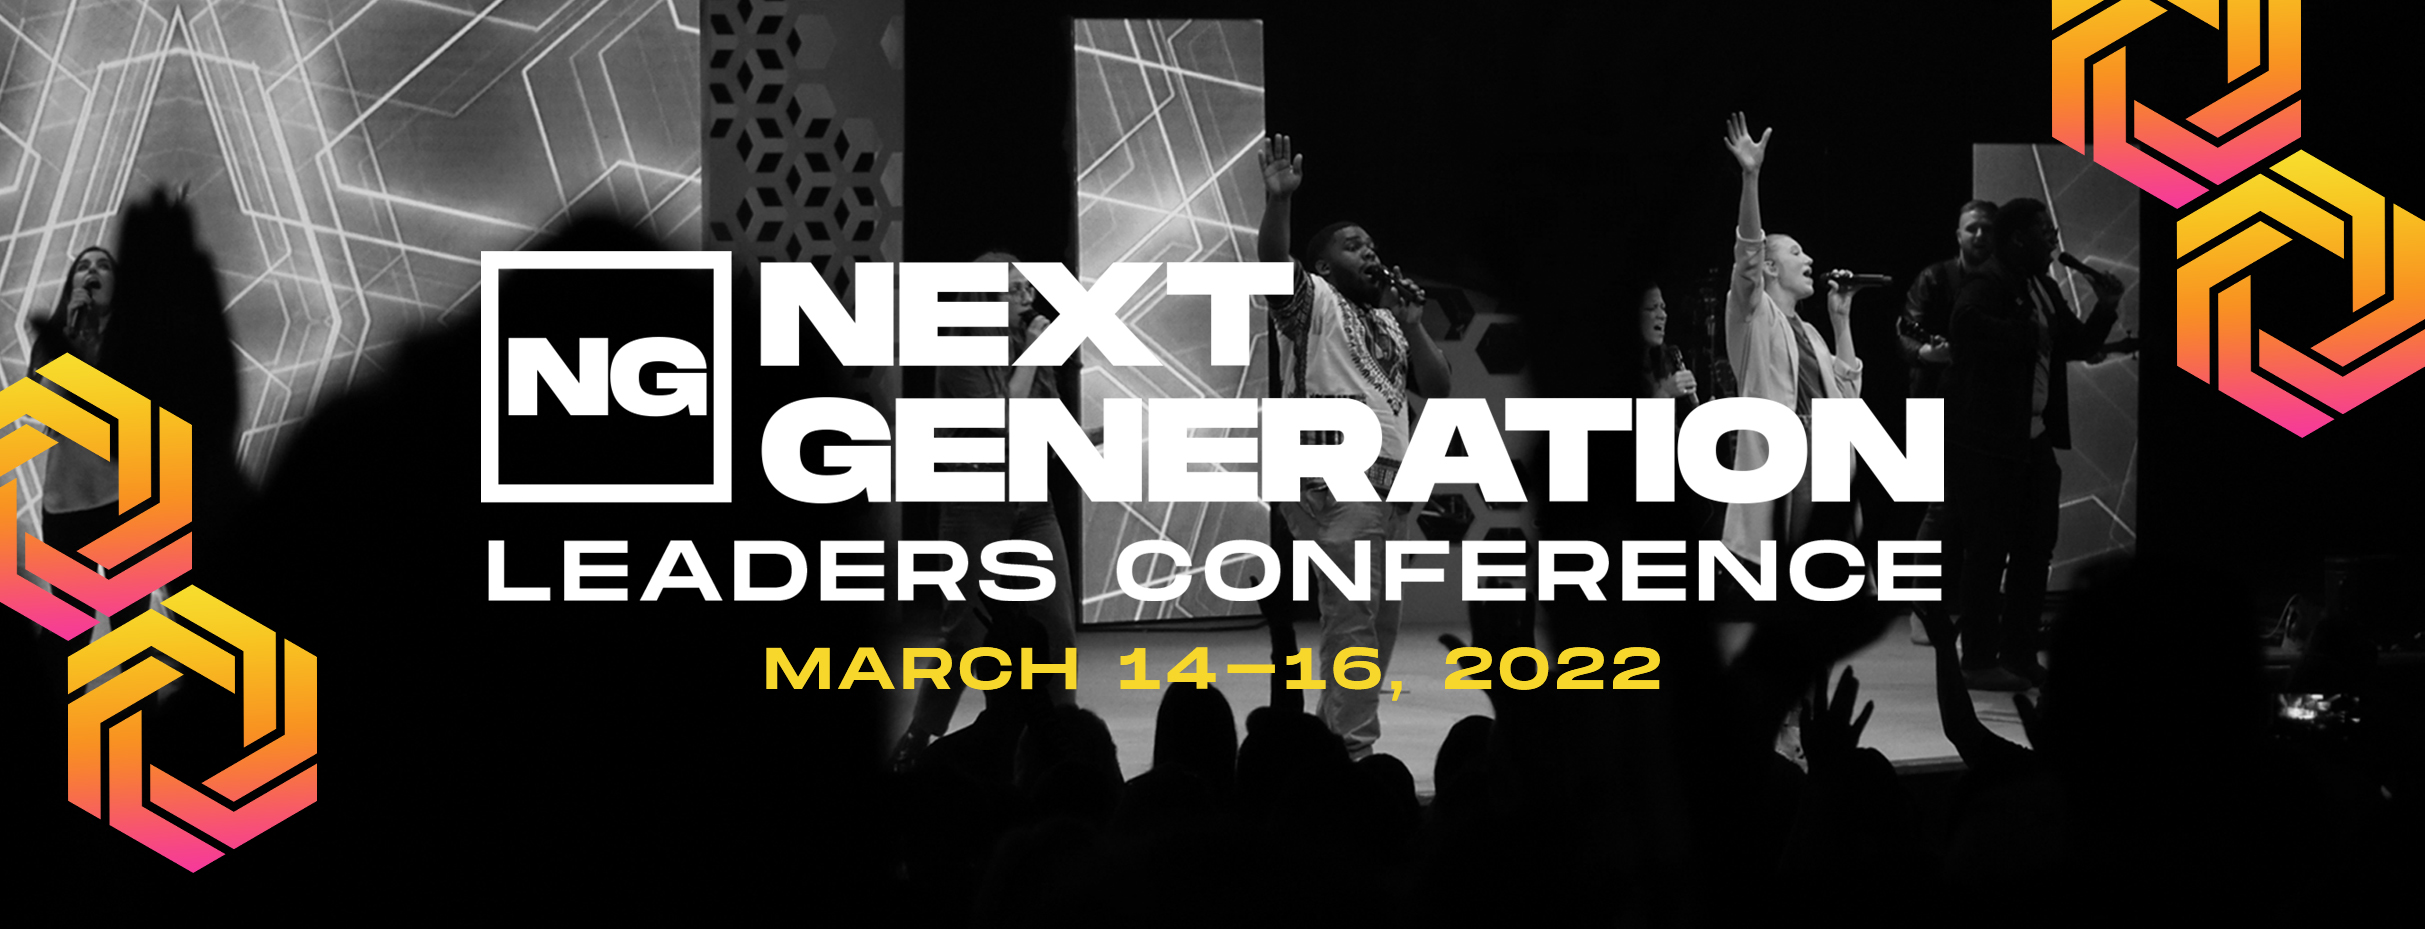 next-gen-conference-march 14 through 16 2022